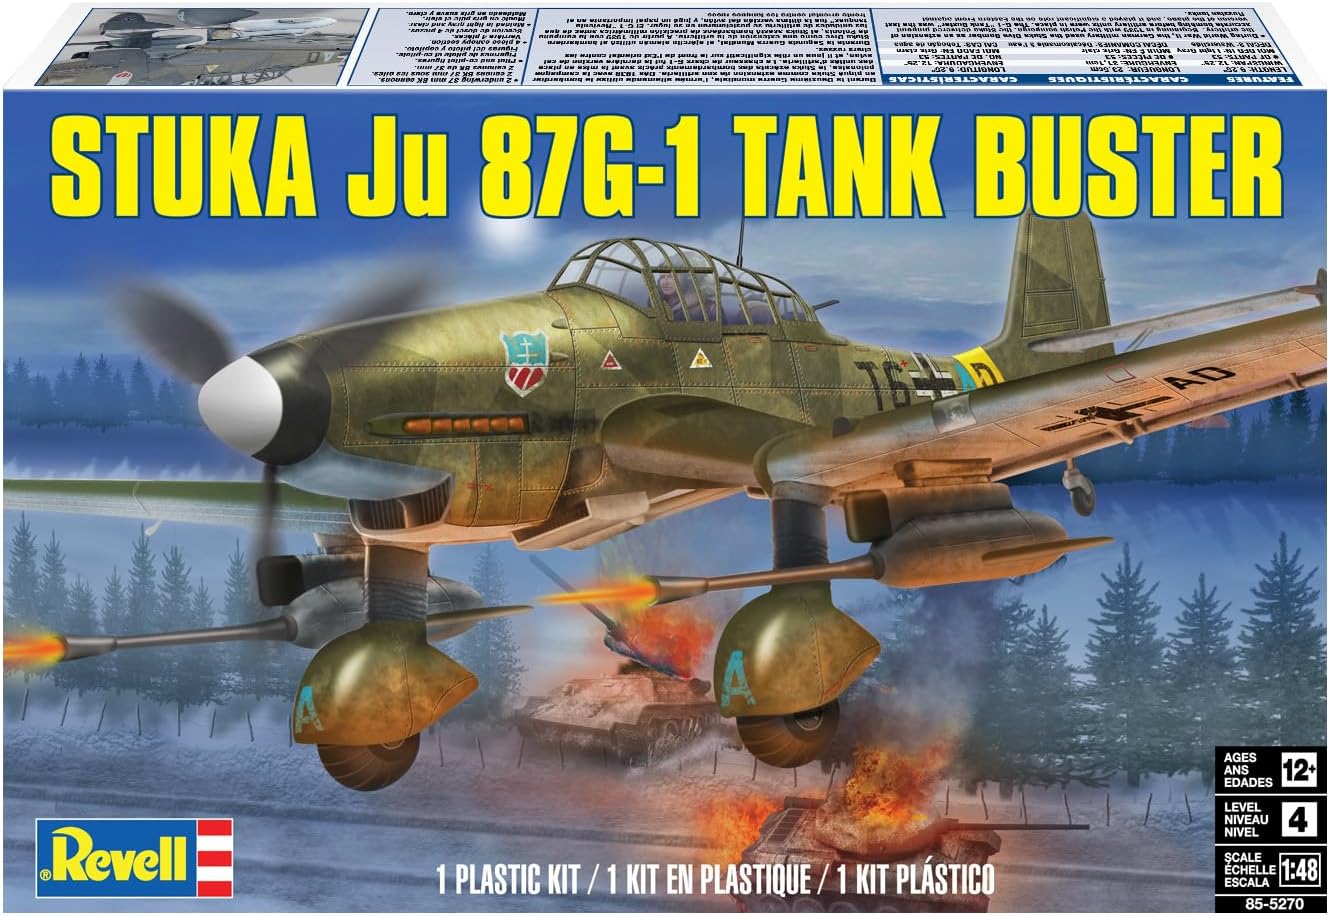 Revell 85-5270 Stuka Ju 87G-1 Tank Buster 1/48 Scale Model Kit